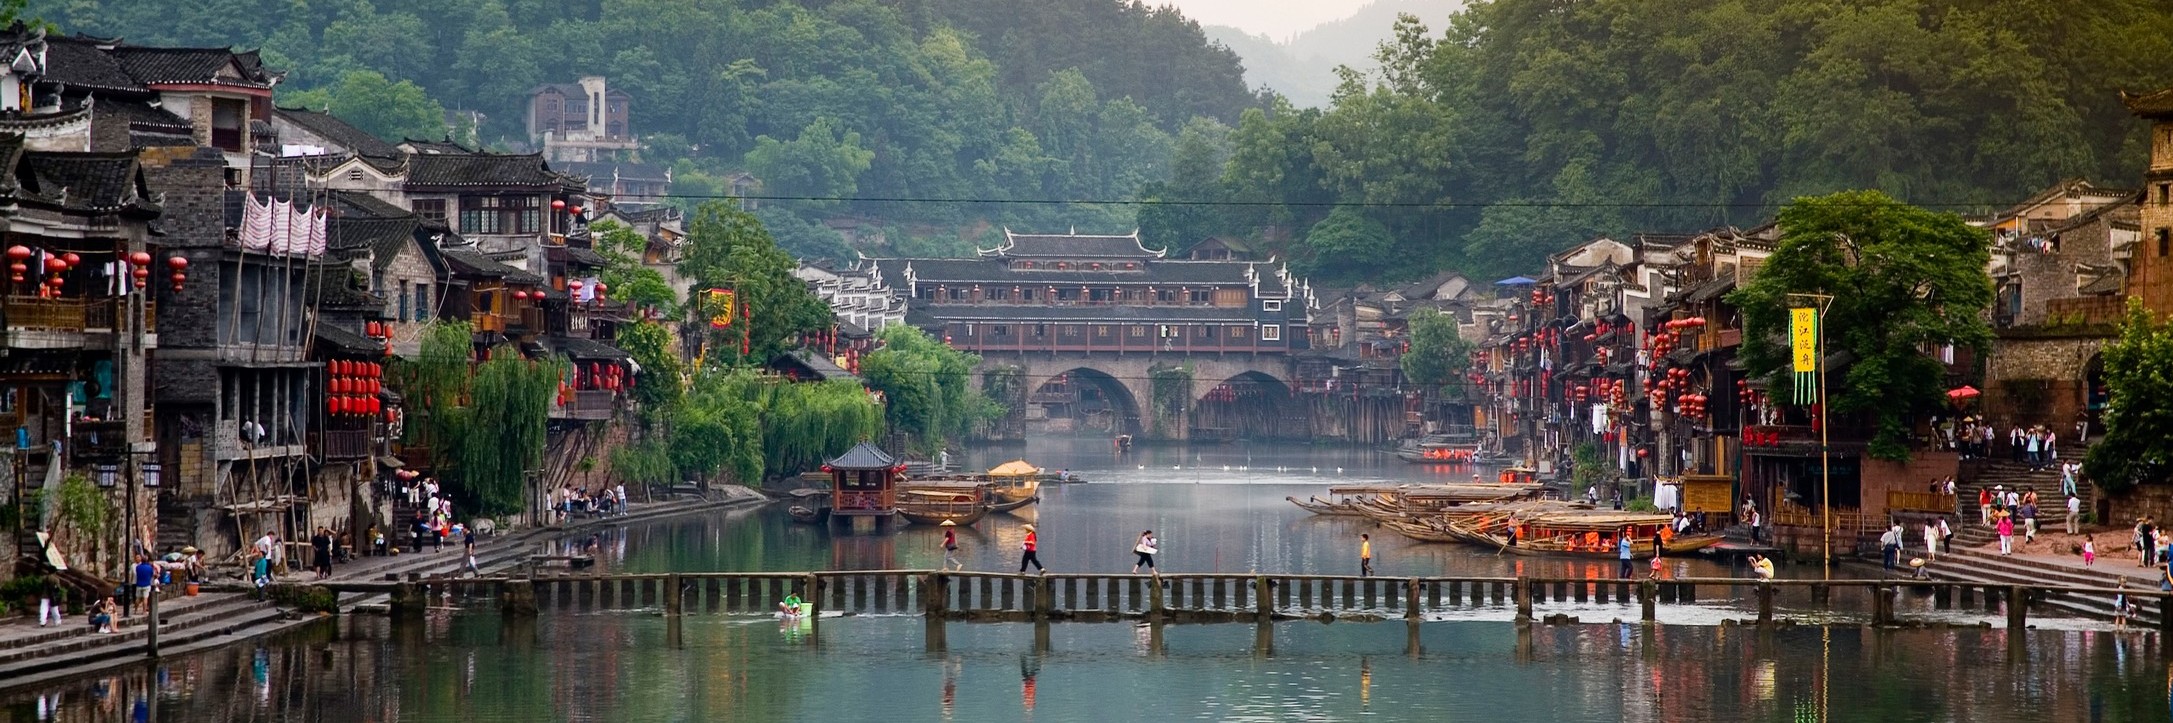 HuNan Fenghuang Ancient town